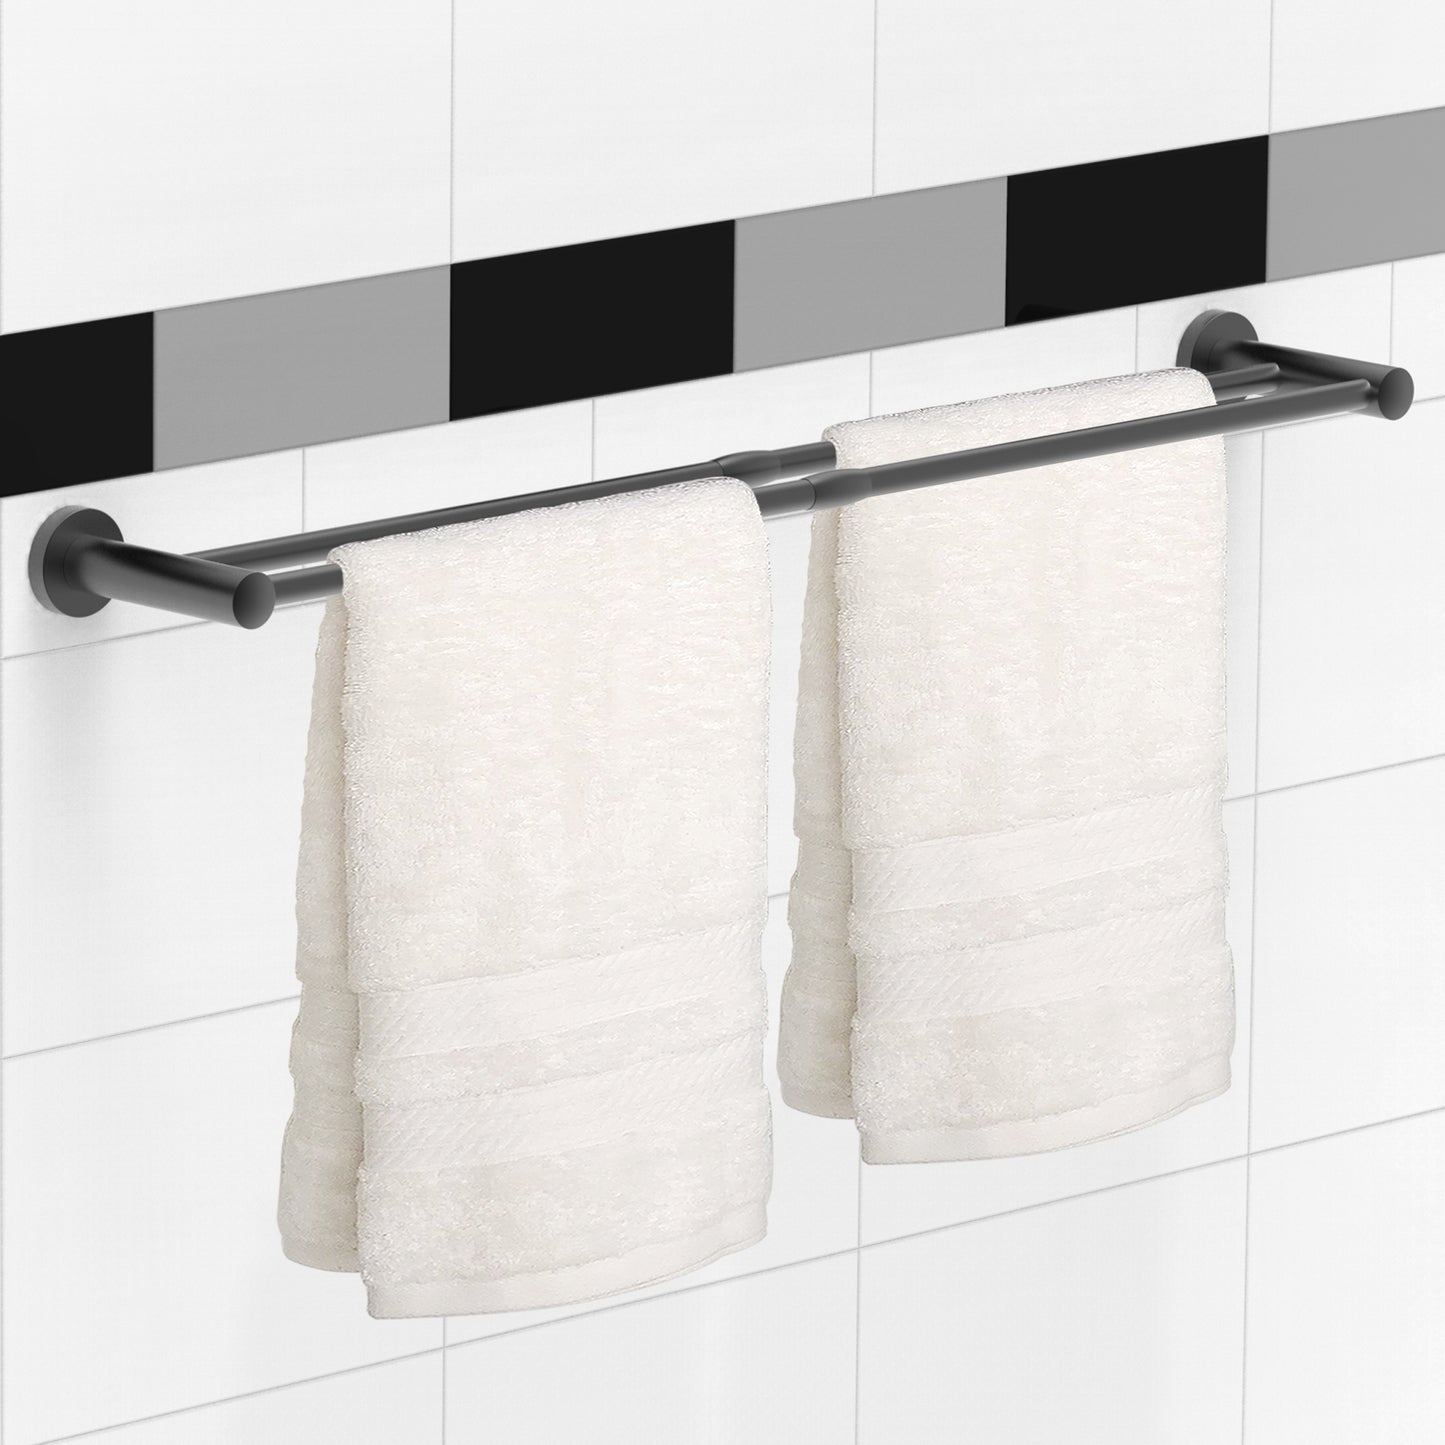 Double Towel Bar